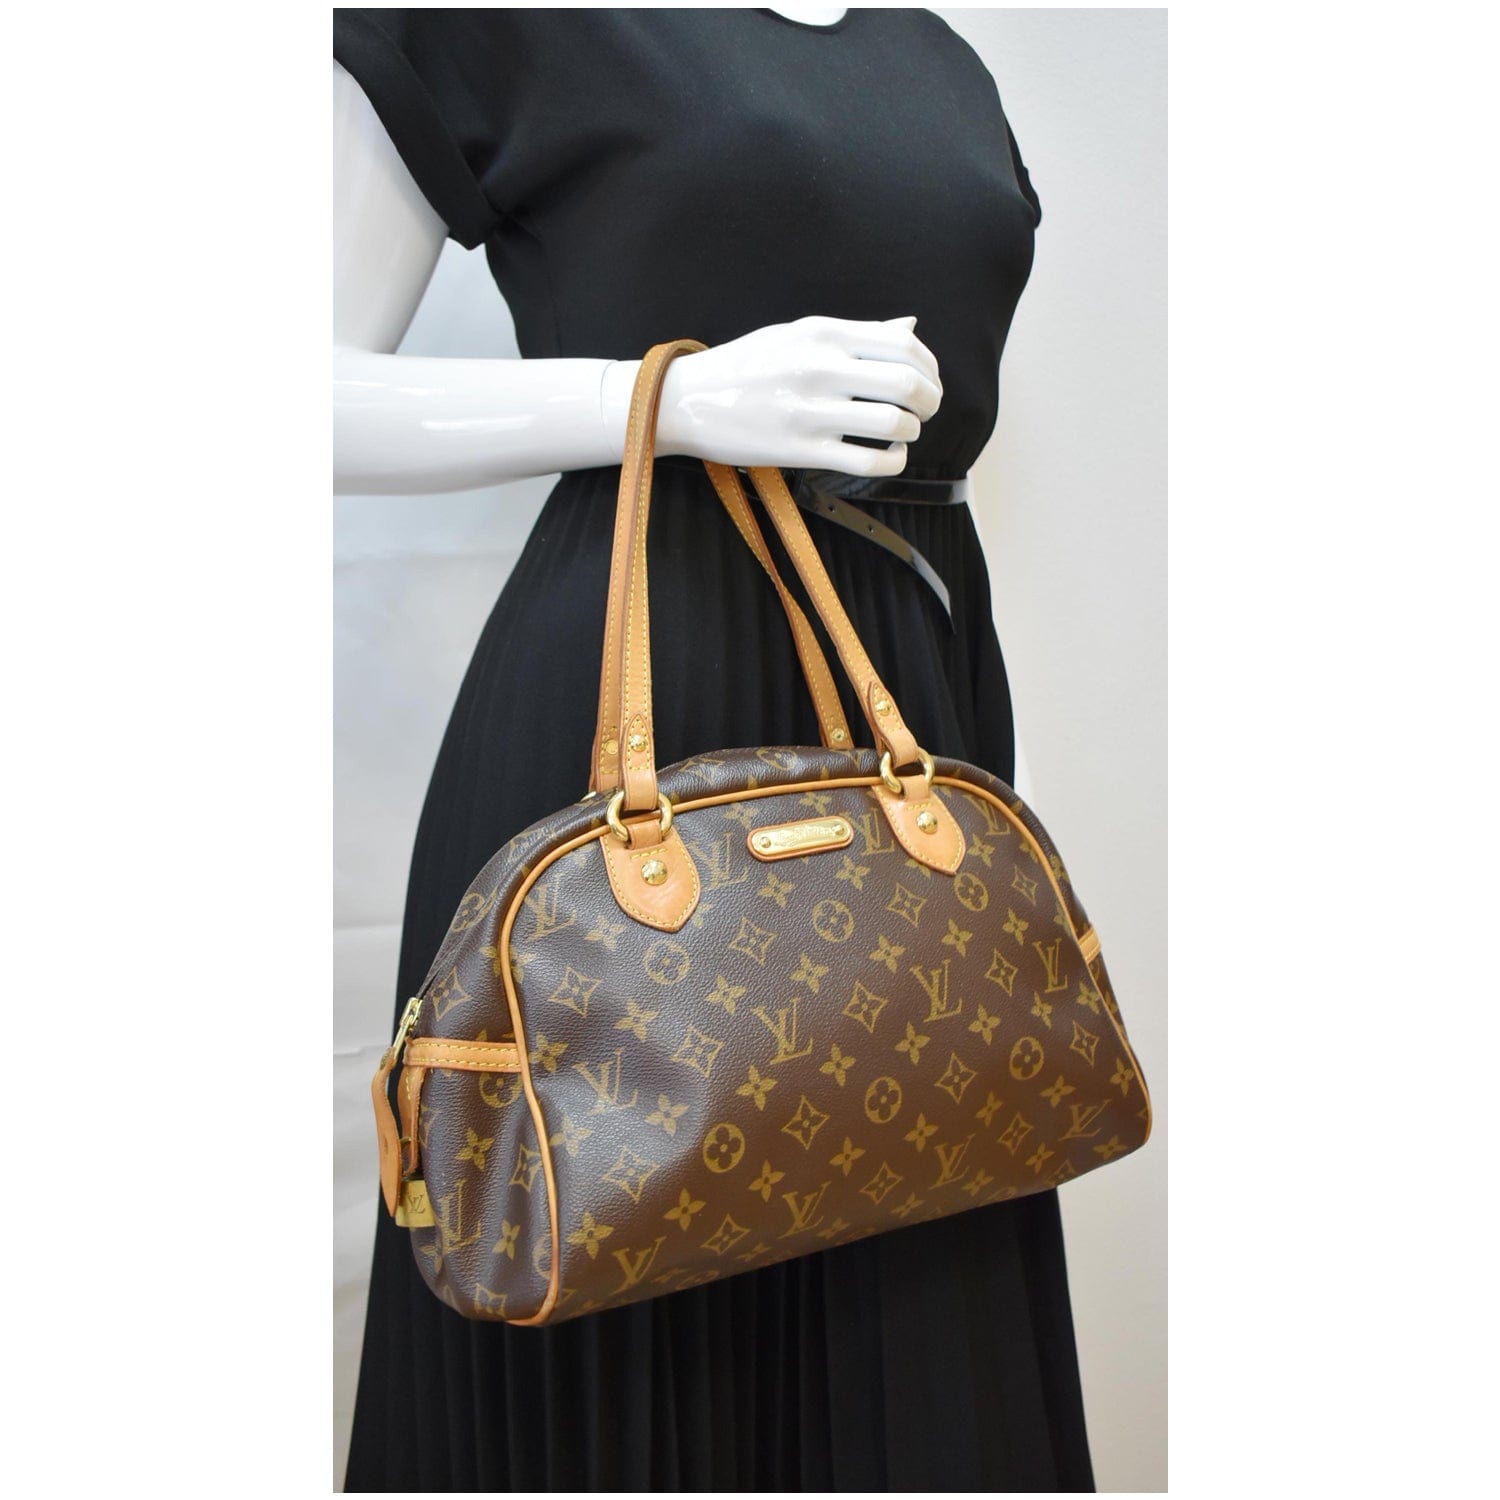 What's in my Bag? ft CloverSac  Louis Vuitton Monty Montorgueil PM 